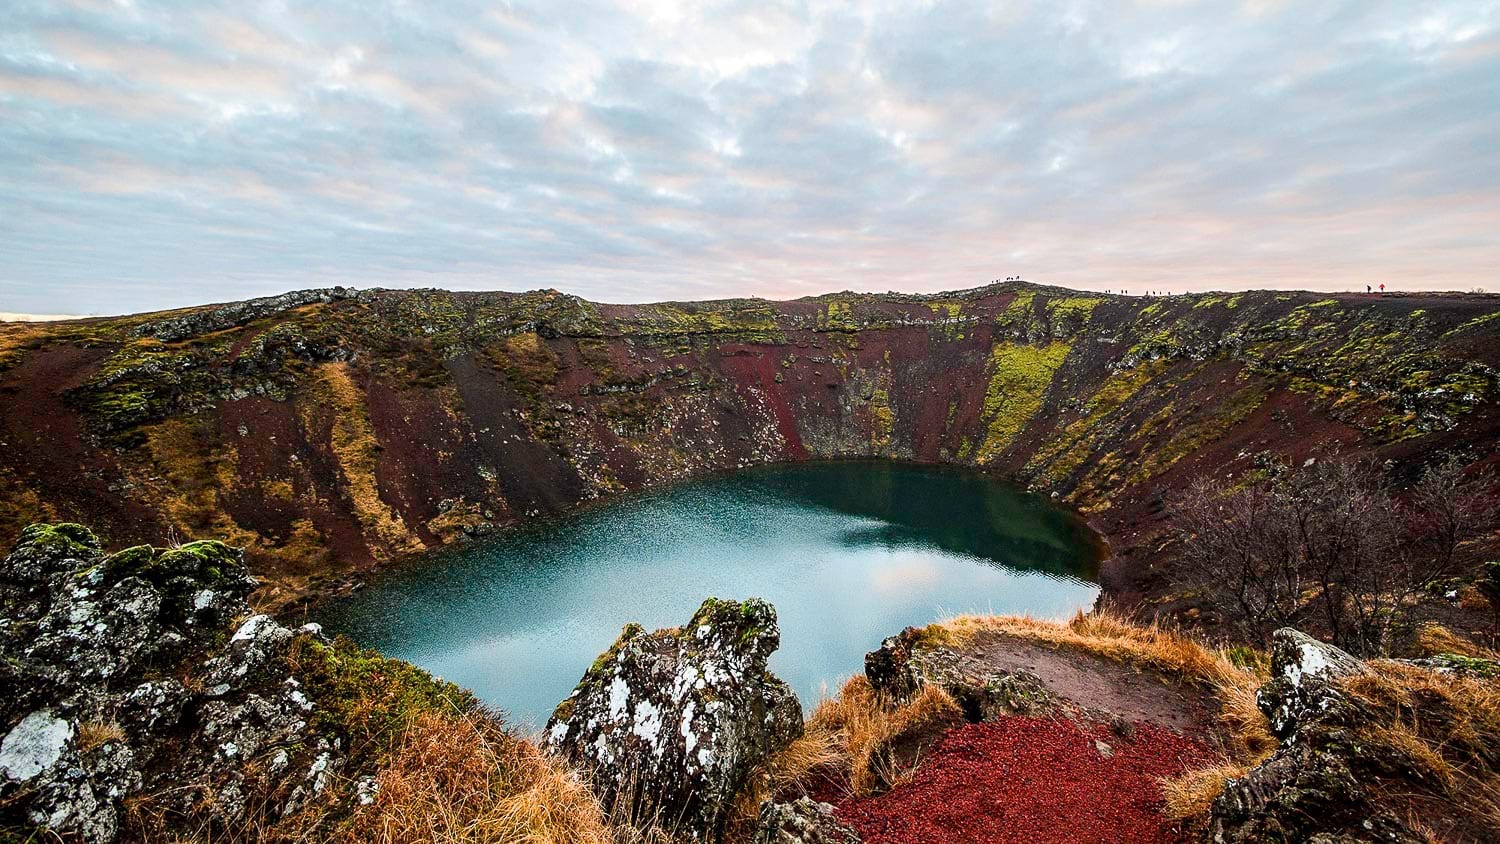 Kerid volcanic crater